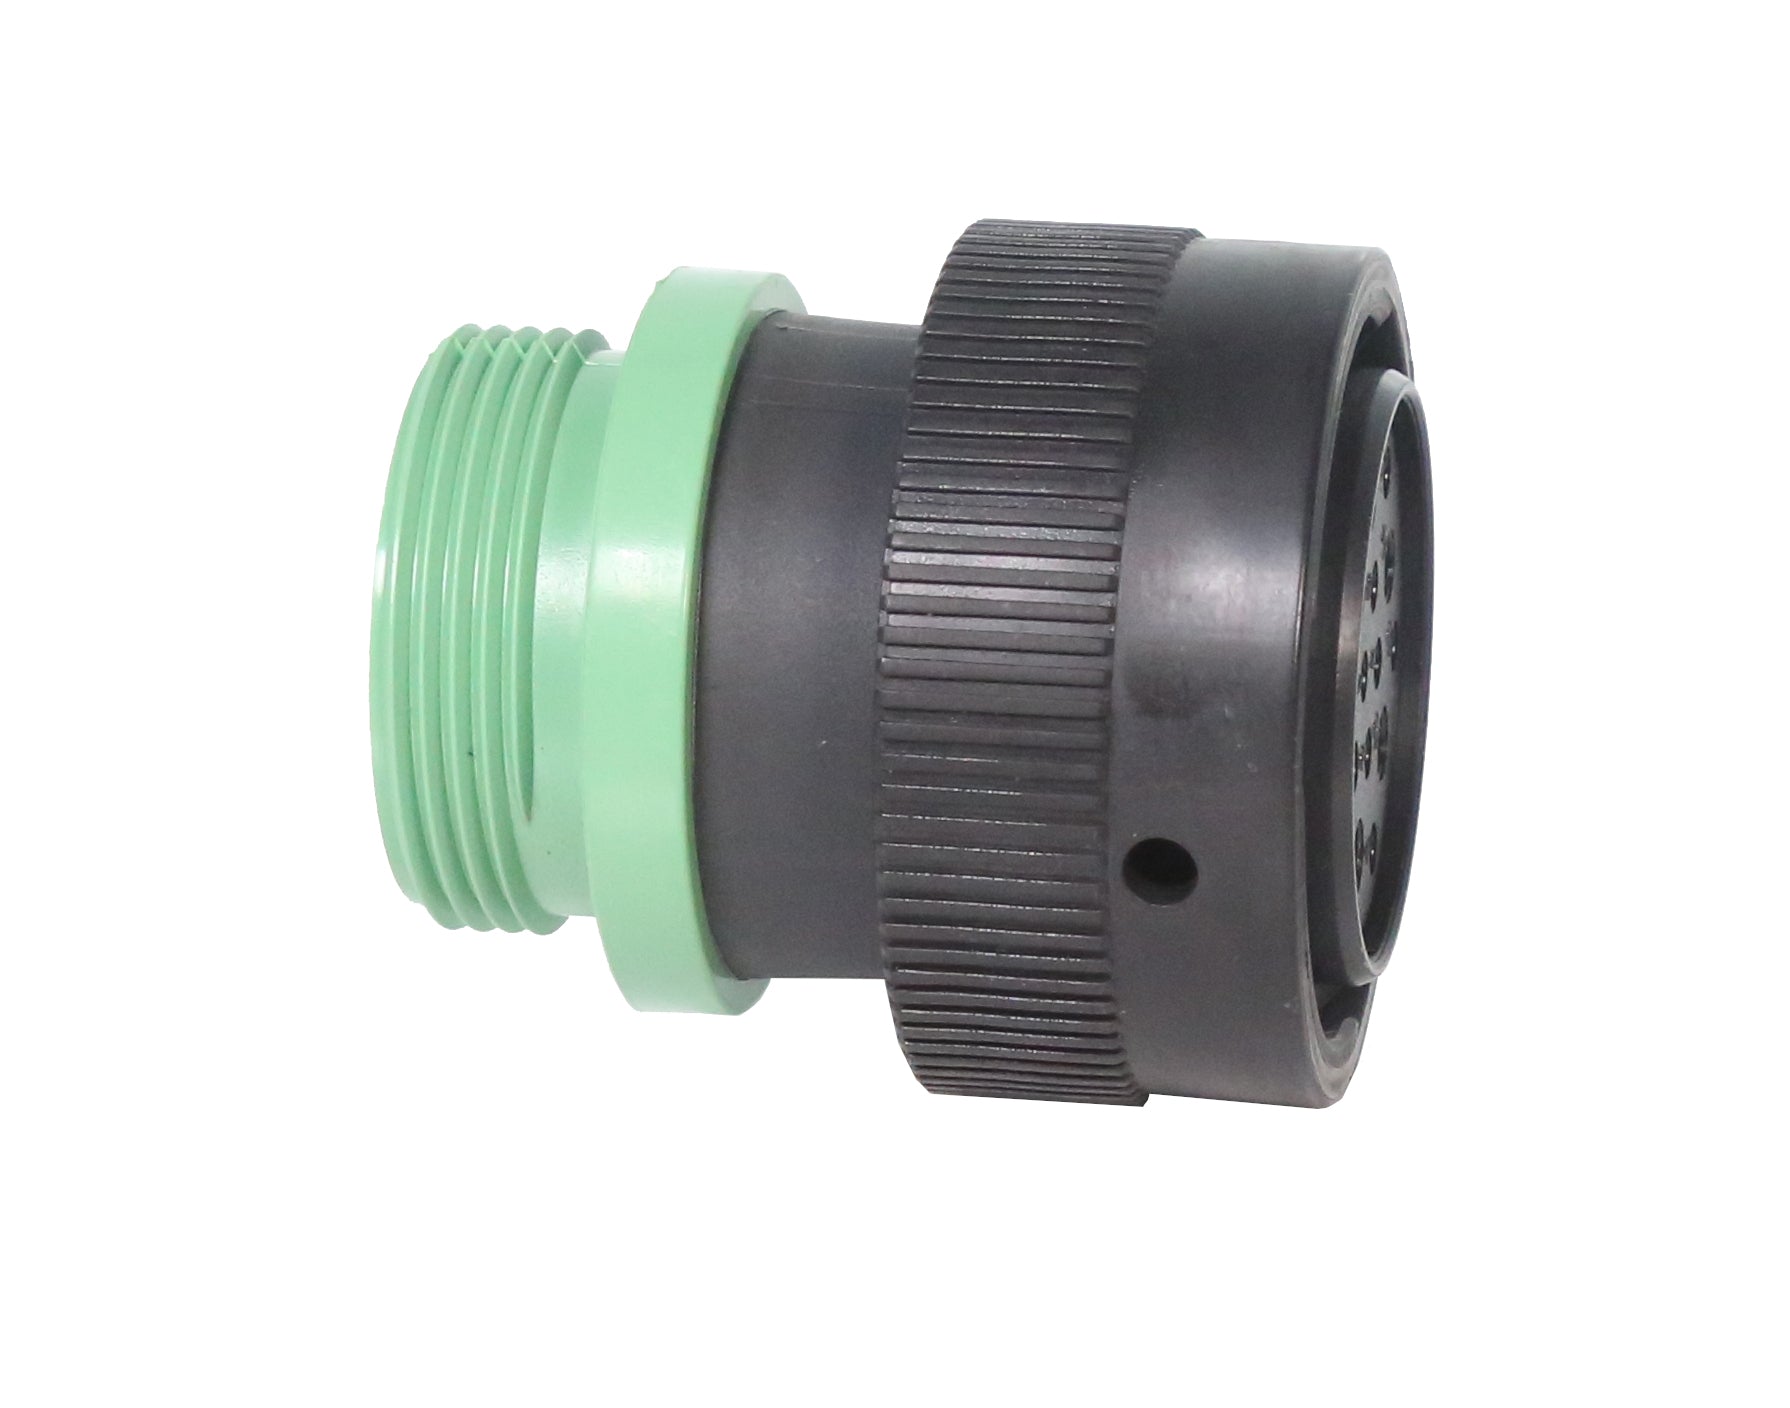 19 Pin Deutch Plug | C-HDP26-24-19SN-L015